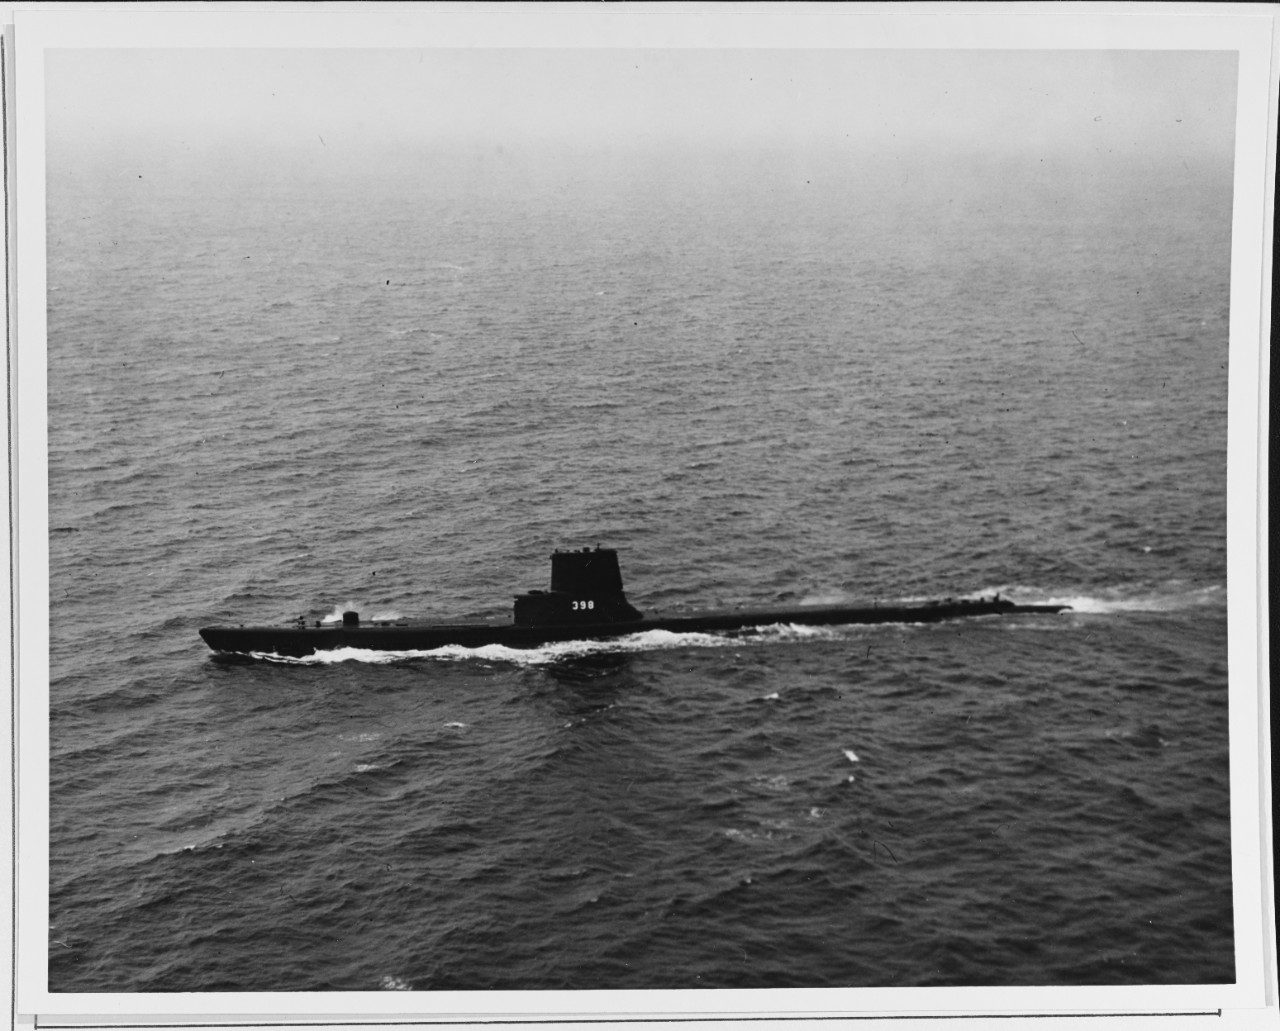 USS SEGUNDO (SS-398)